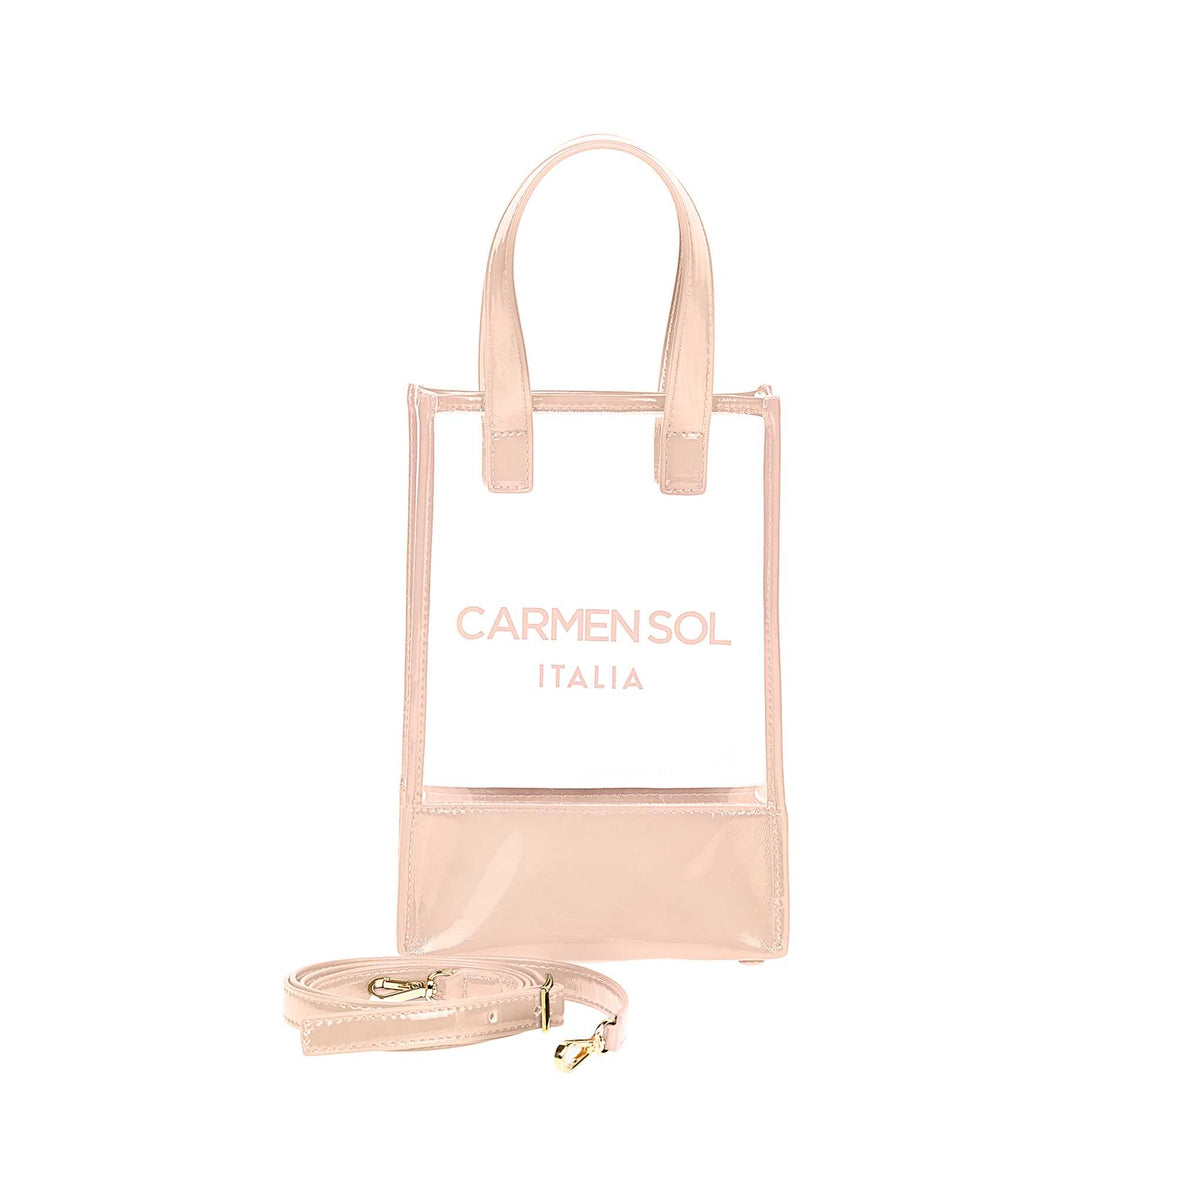 nude mini crossbdoy bag for women. Carmen sol shoulder clear bag for beach lovers